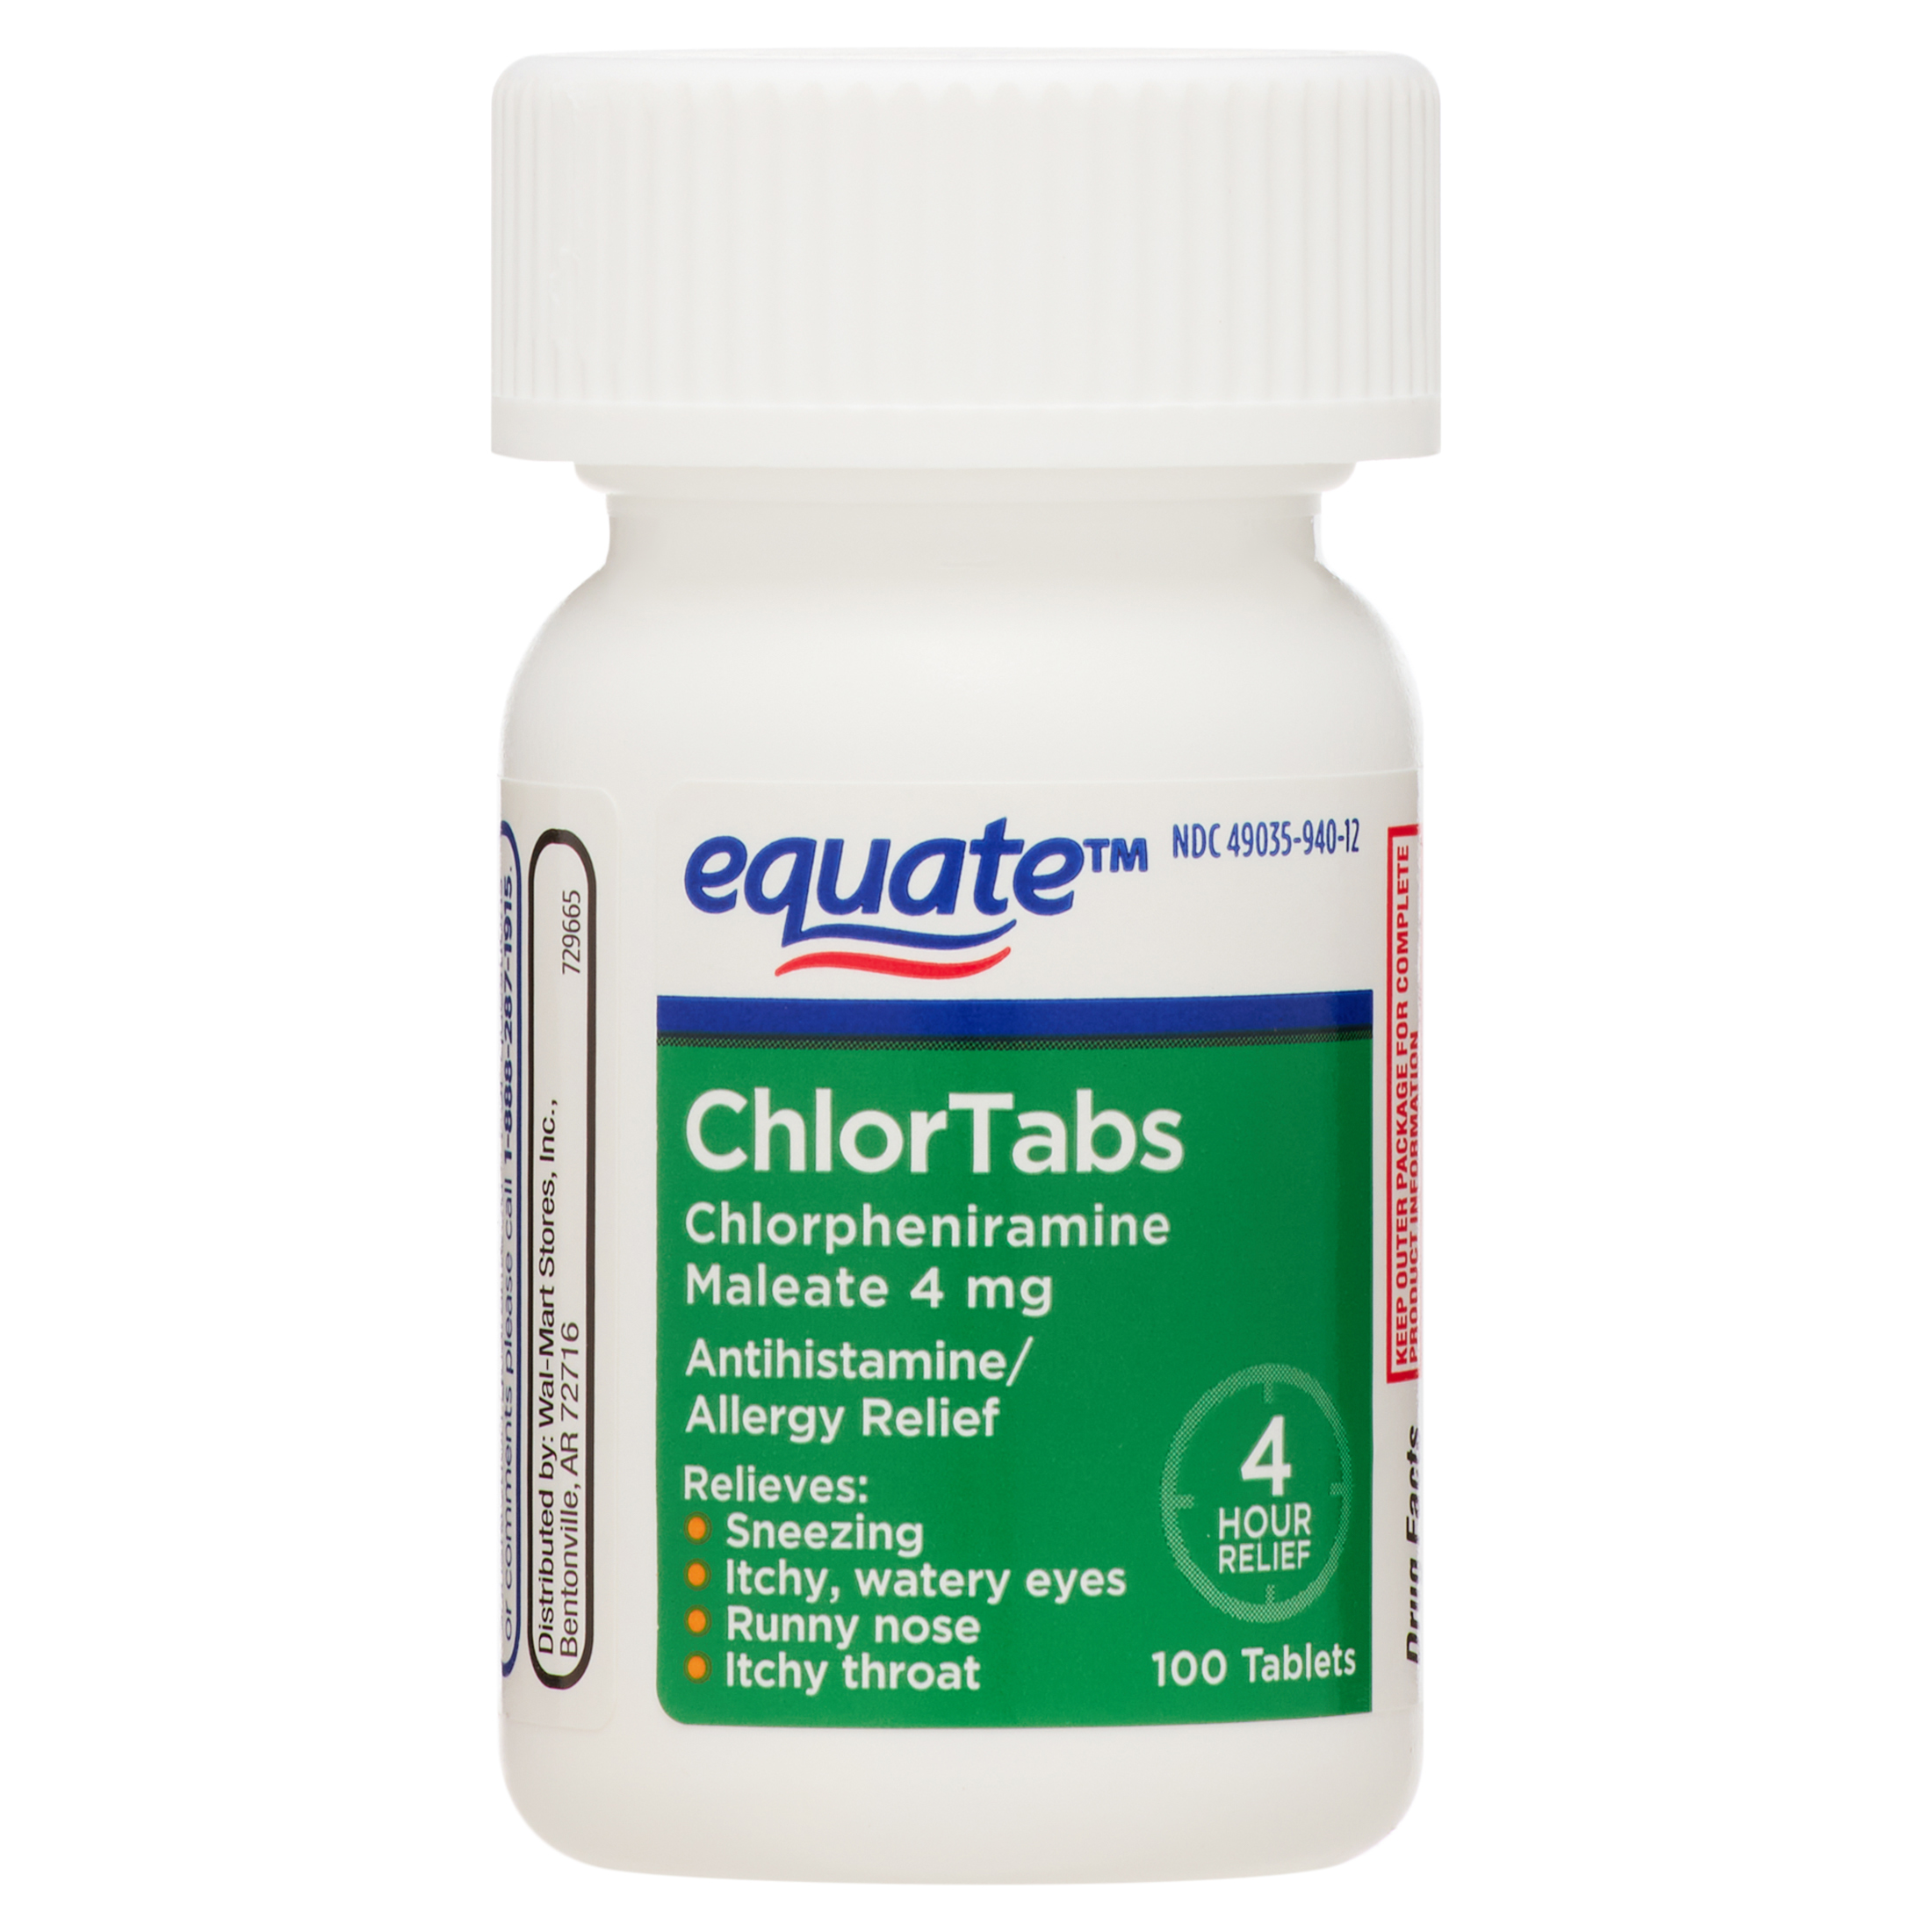 Equate Chlorpheniramine Maleate ChlorTabs Tablets, 4 mg, 100 Count - image 2 of 9